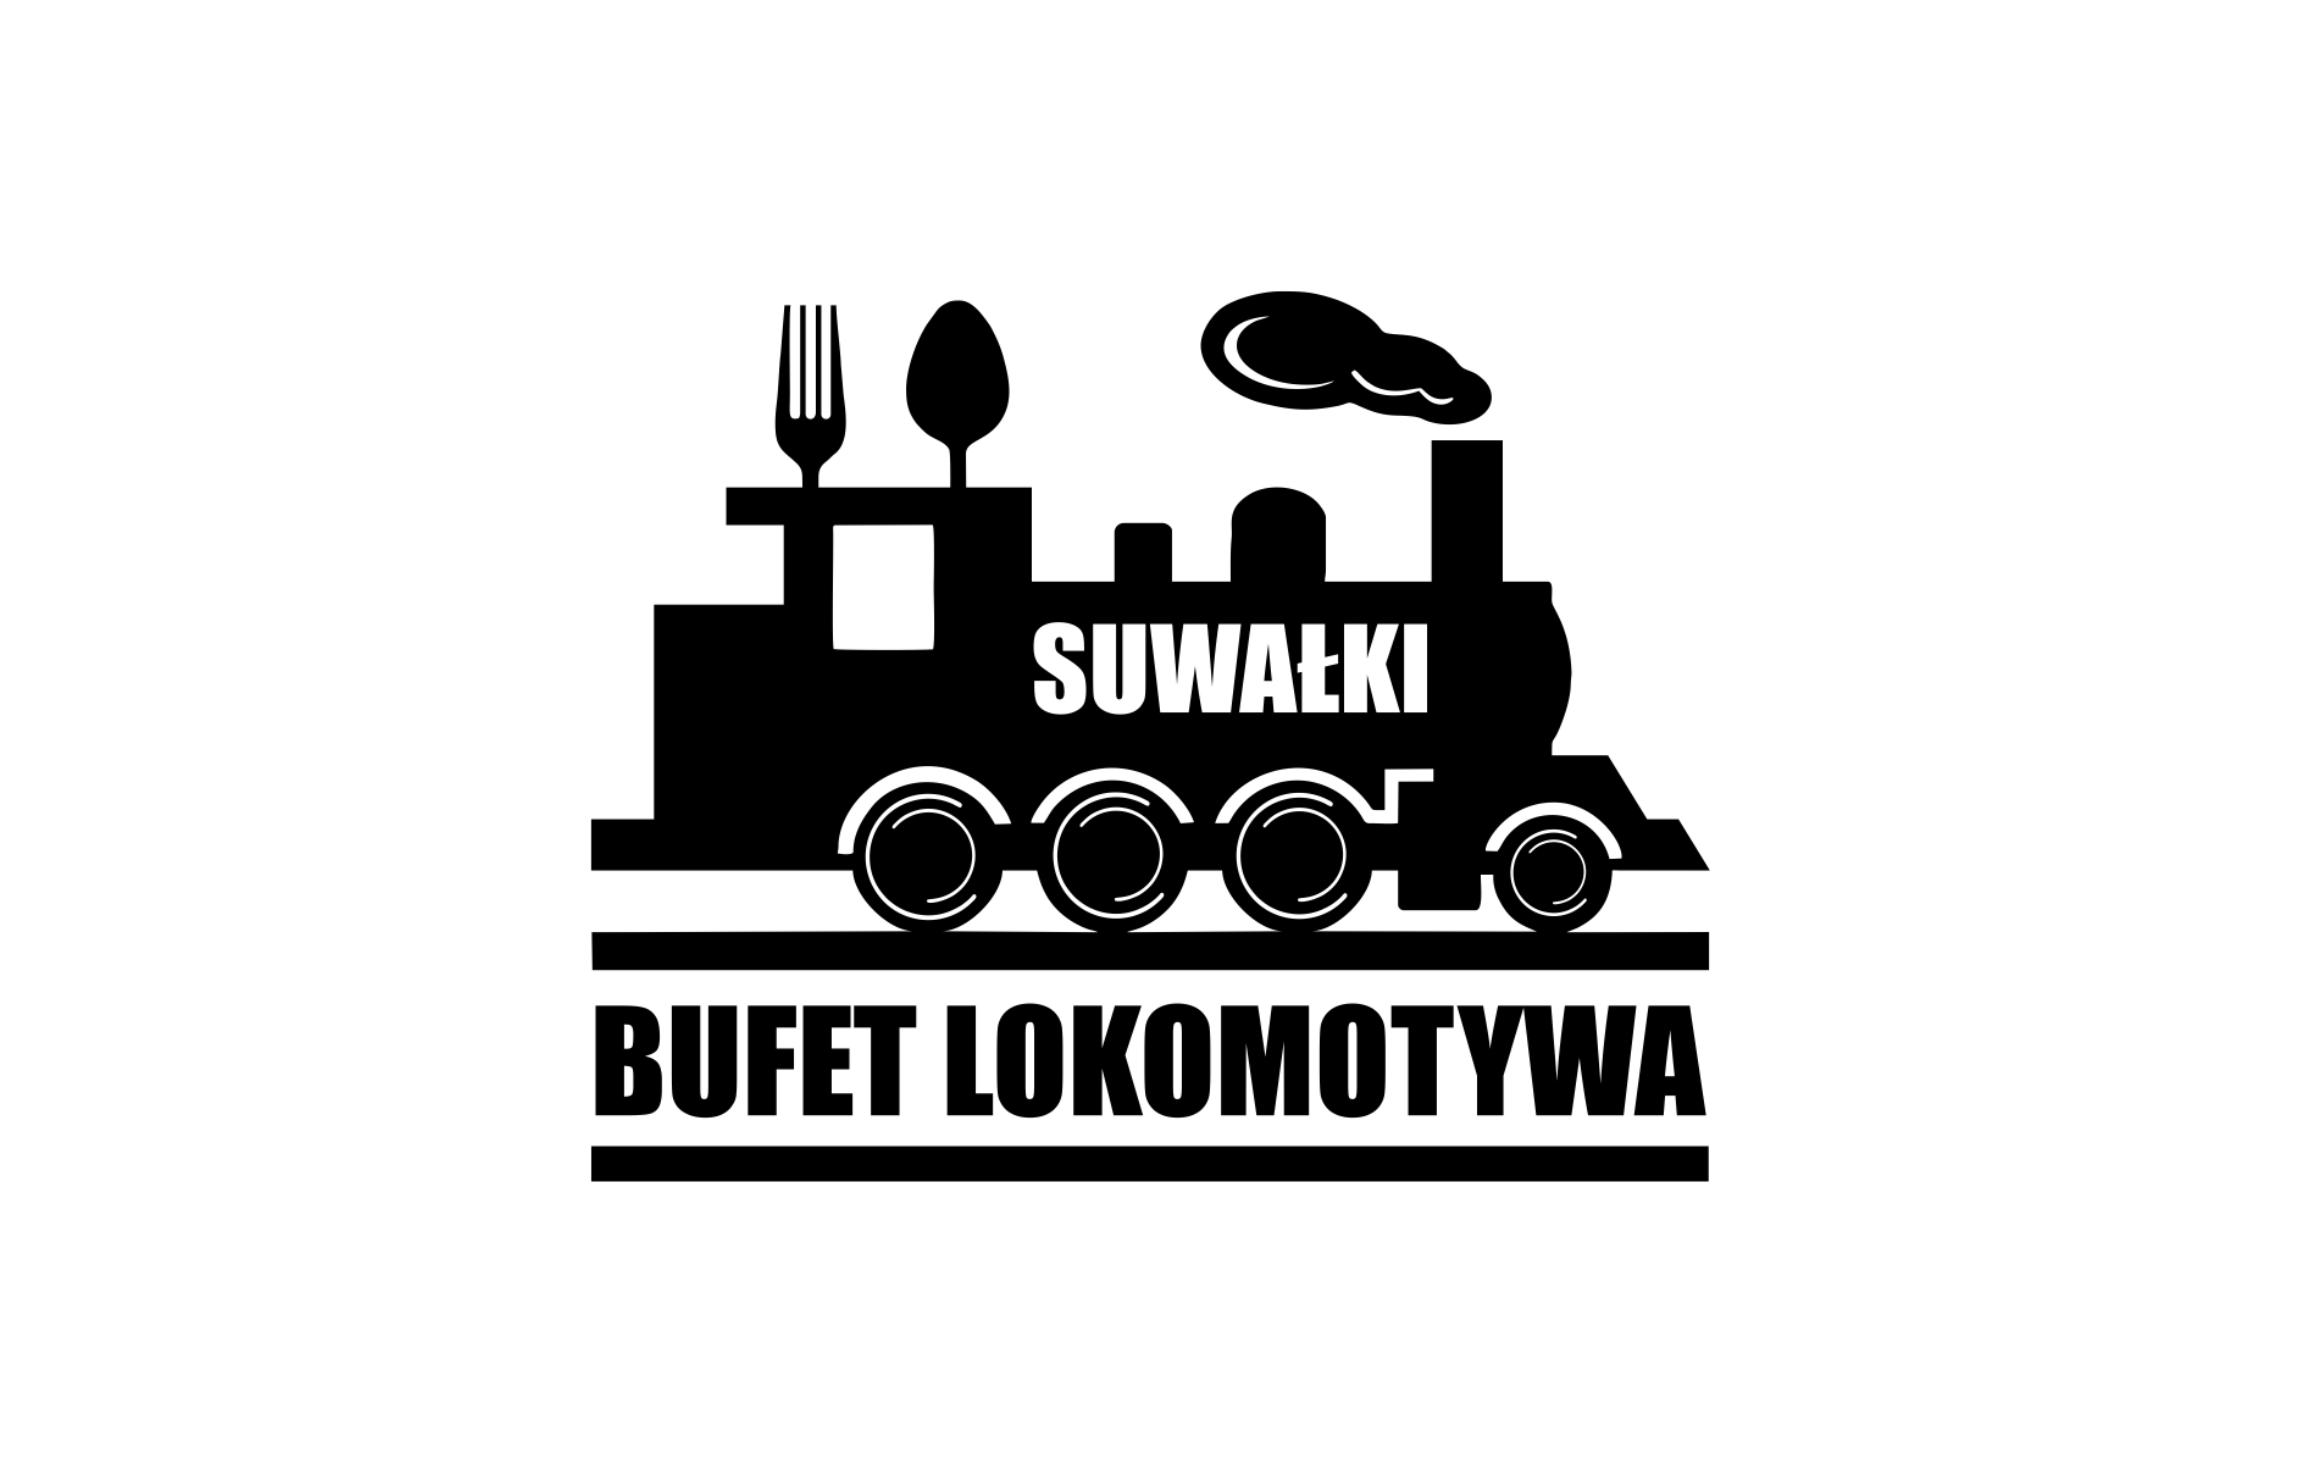 Bufet Lokomotywa